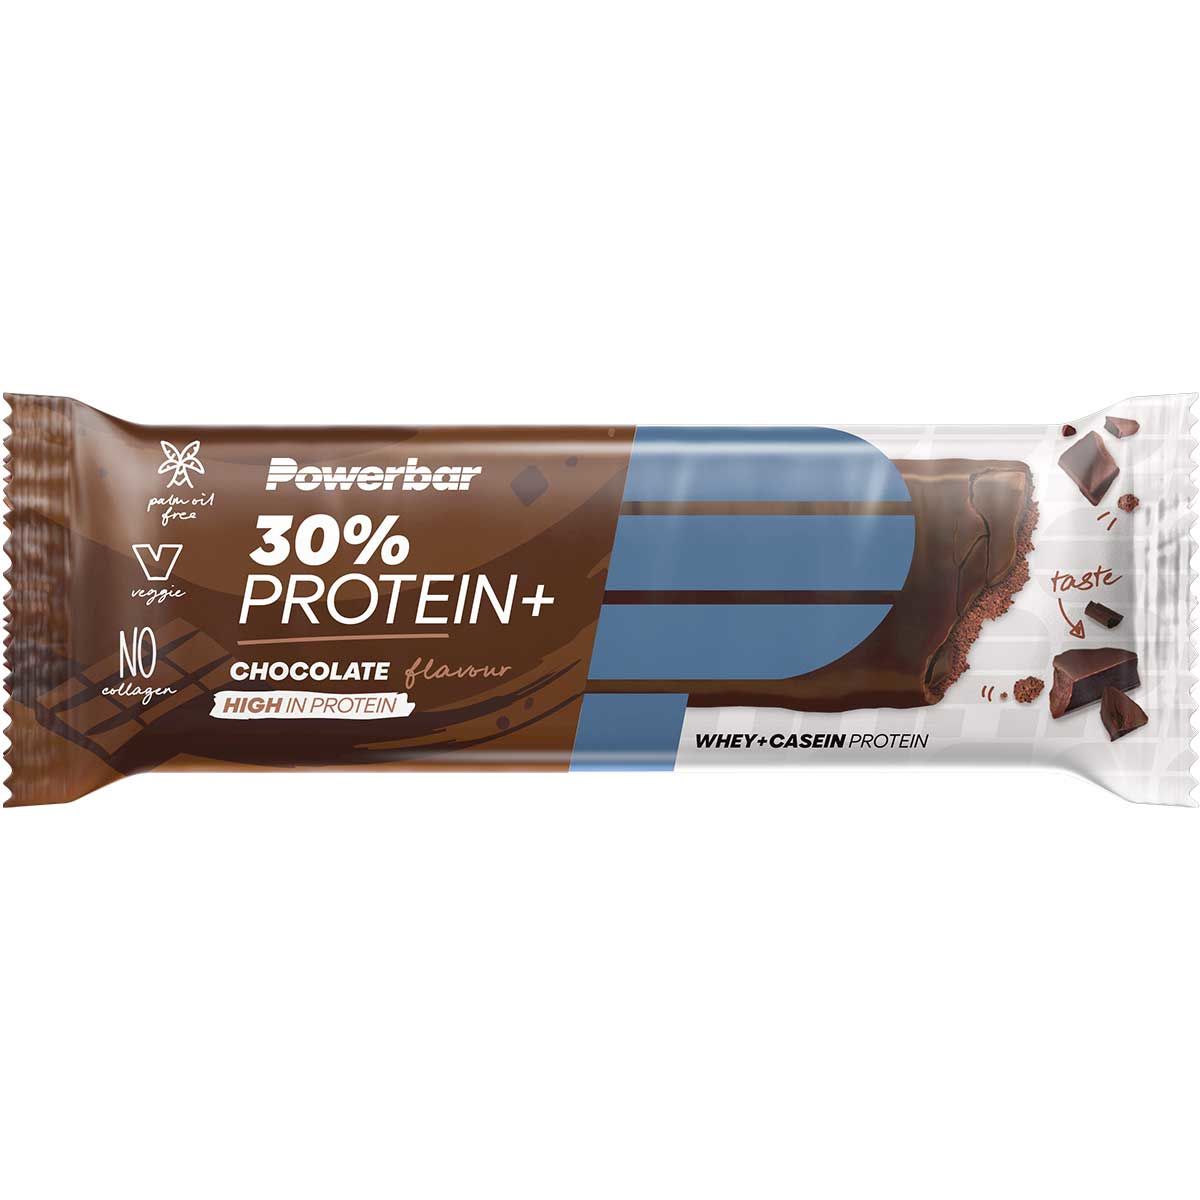 Barre Powerbar 30% Protéine Plus - Chocolat